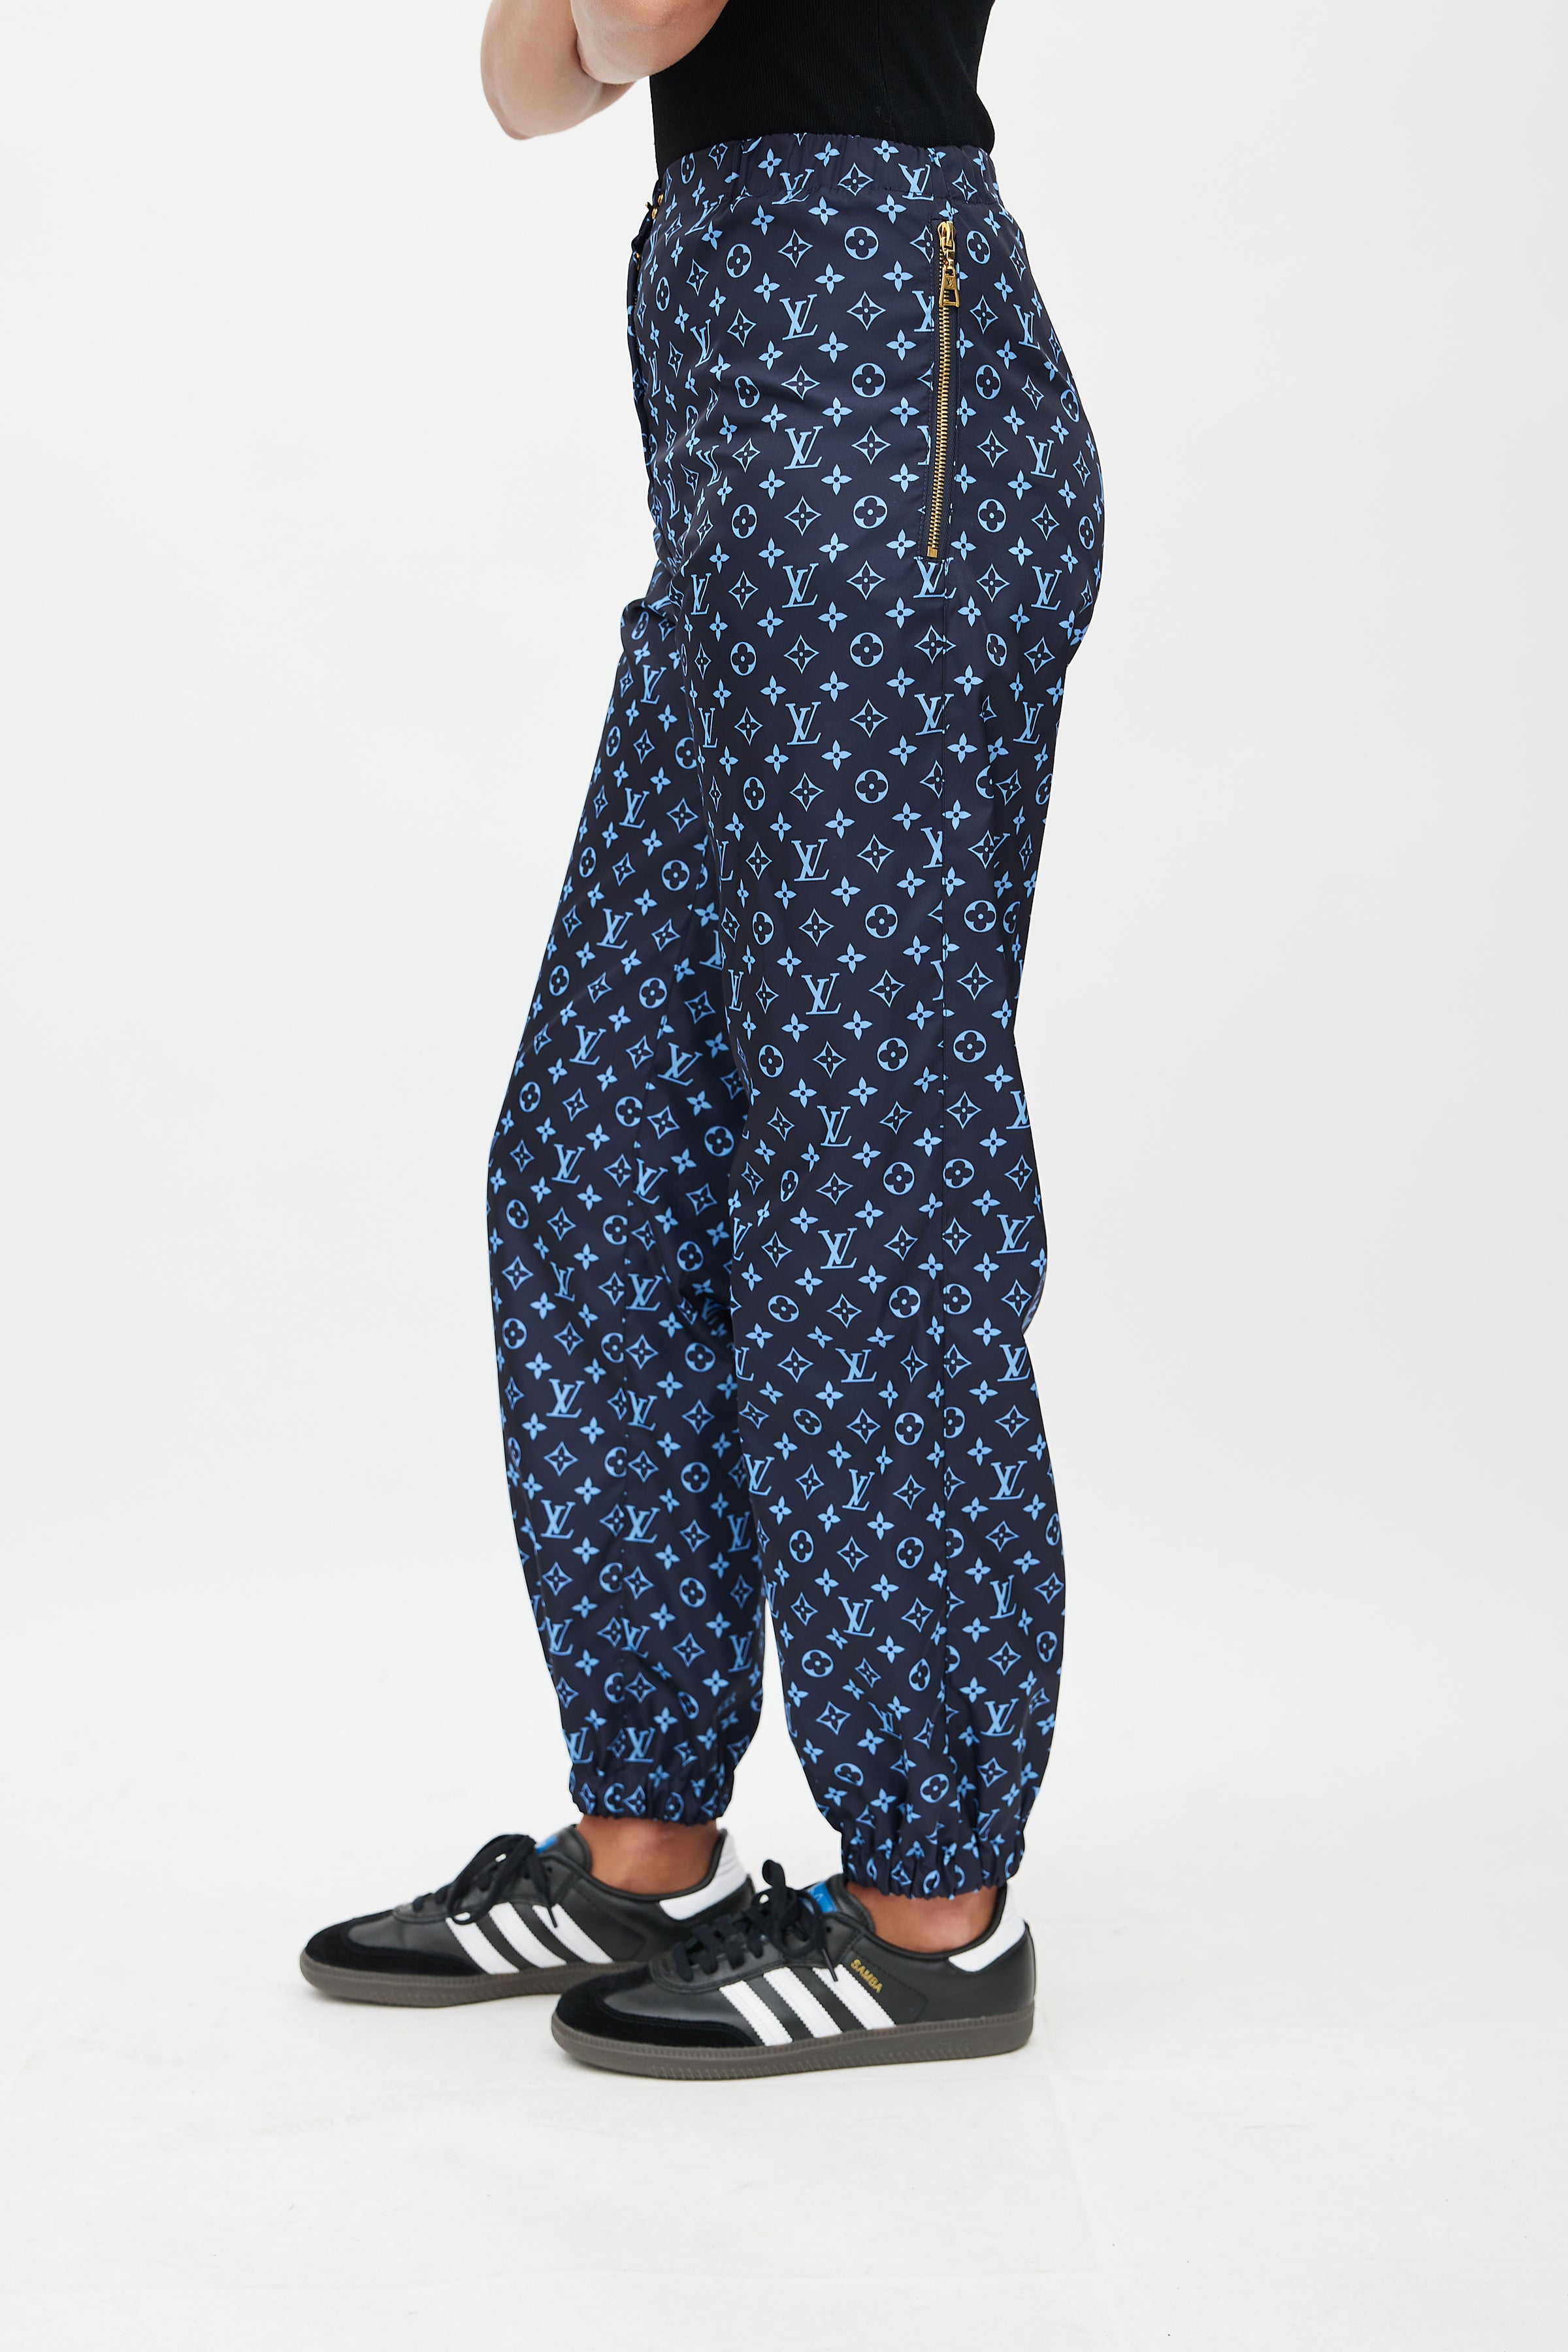 Louis Vuitton Sprayed Monogram Nylon Jogging Pants , Blue, 40